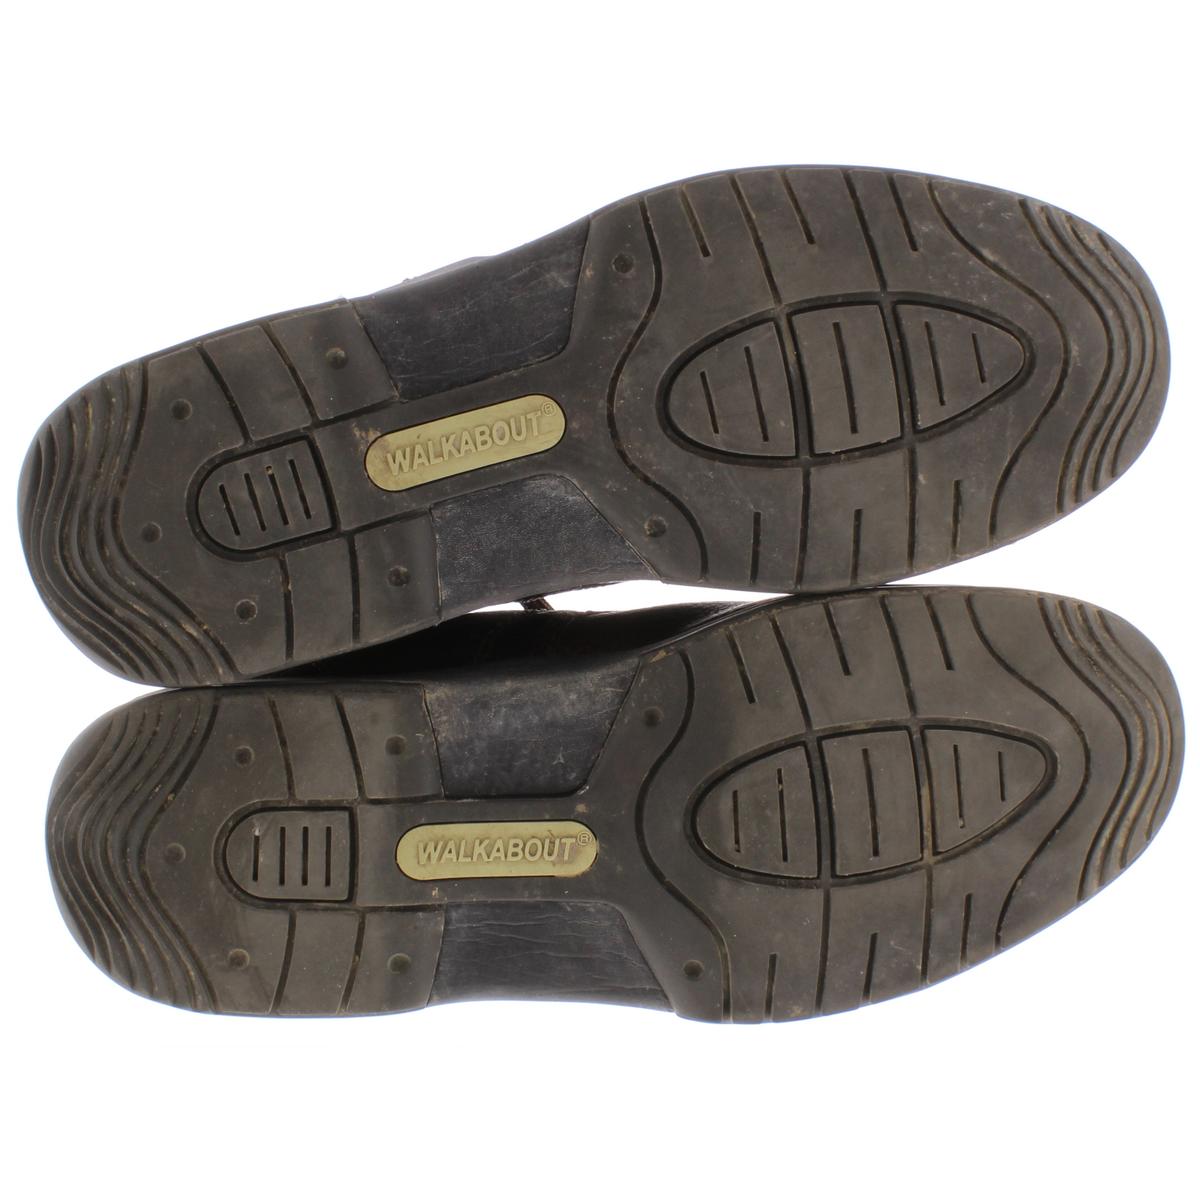 Walkabout Mens Brown Chukka Shoes 10 Medium (D) BHFO 9479 | eBay